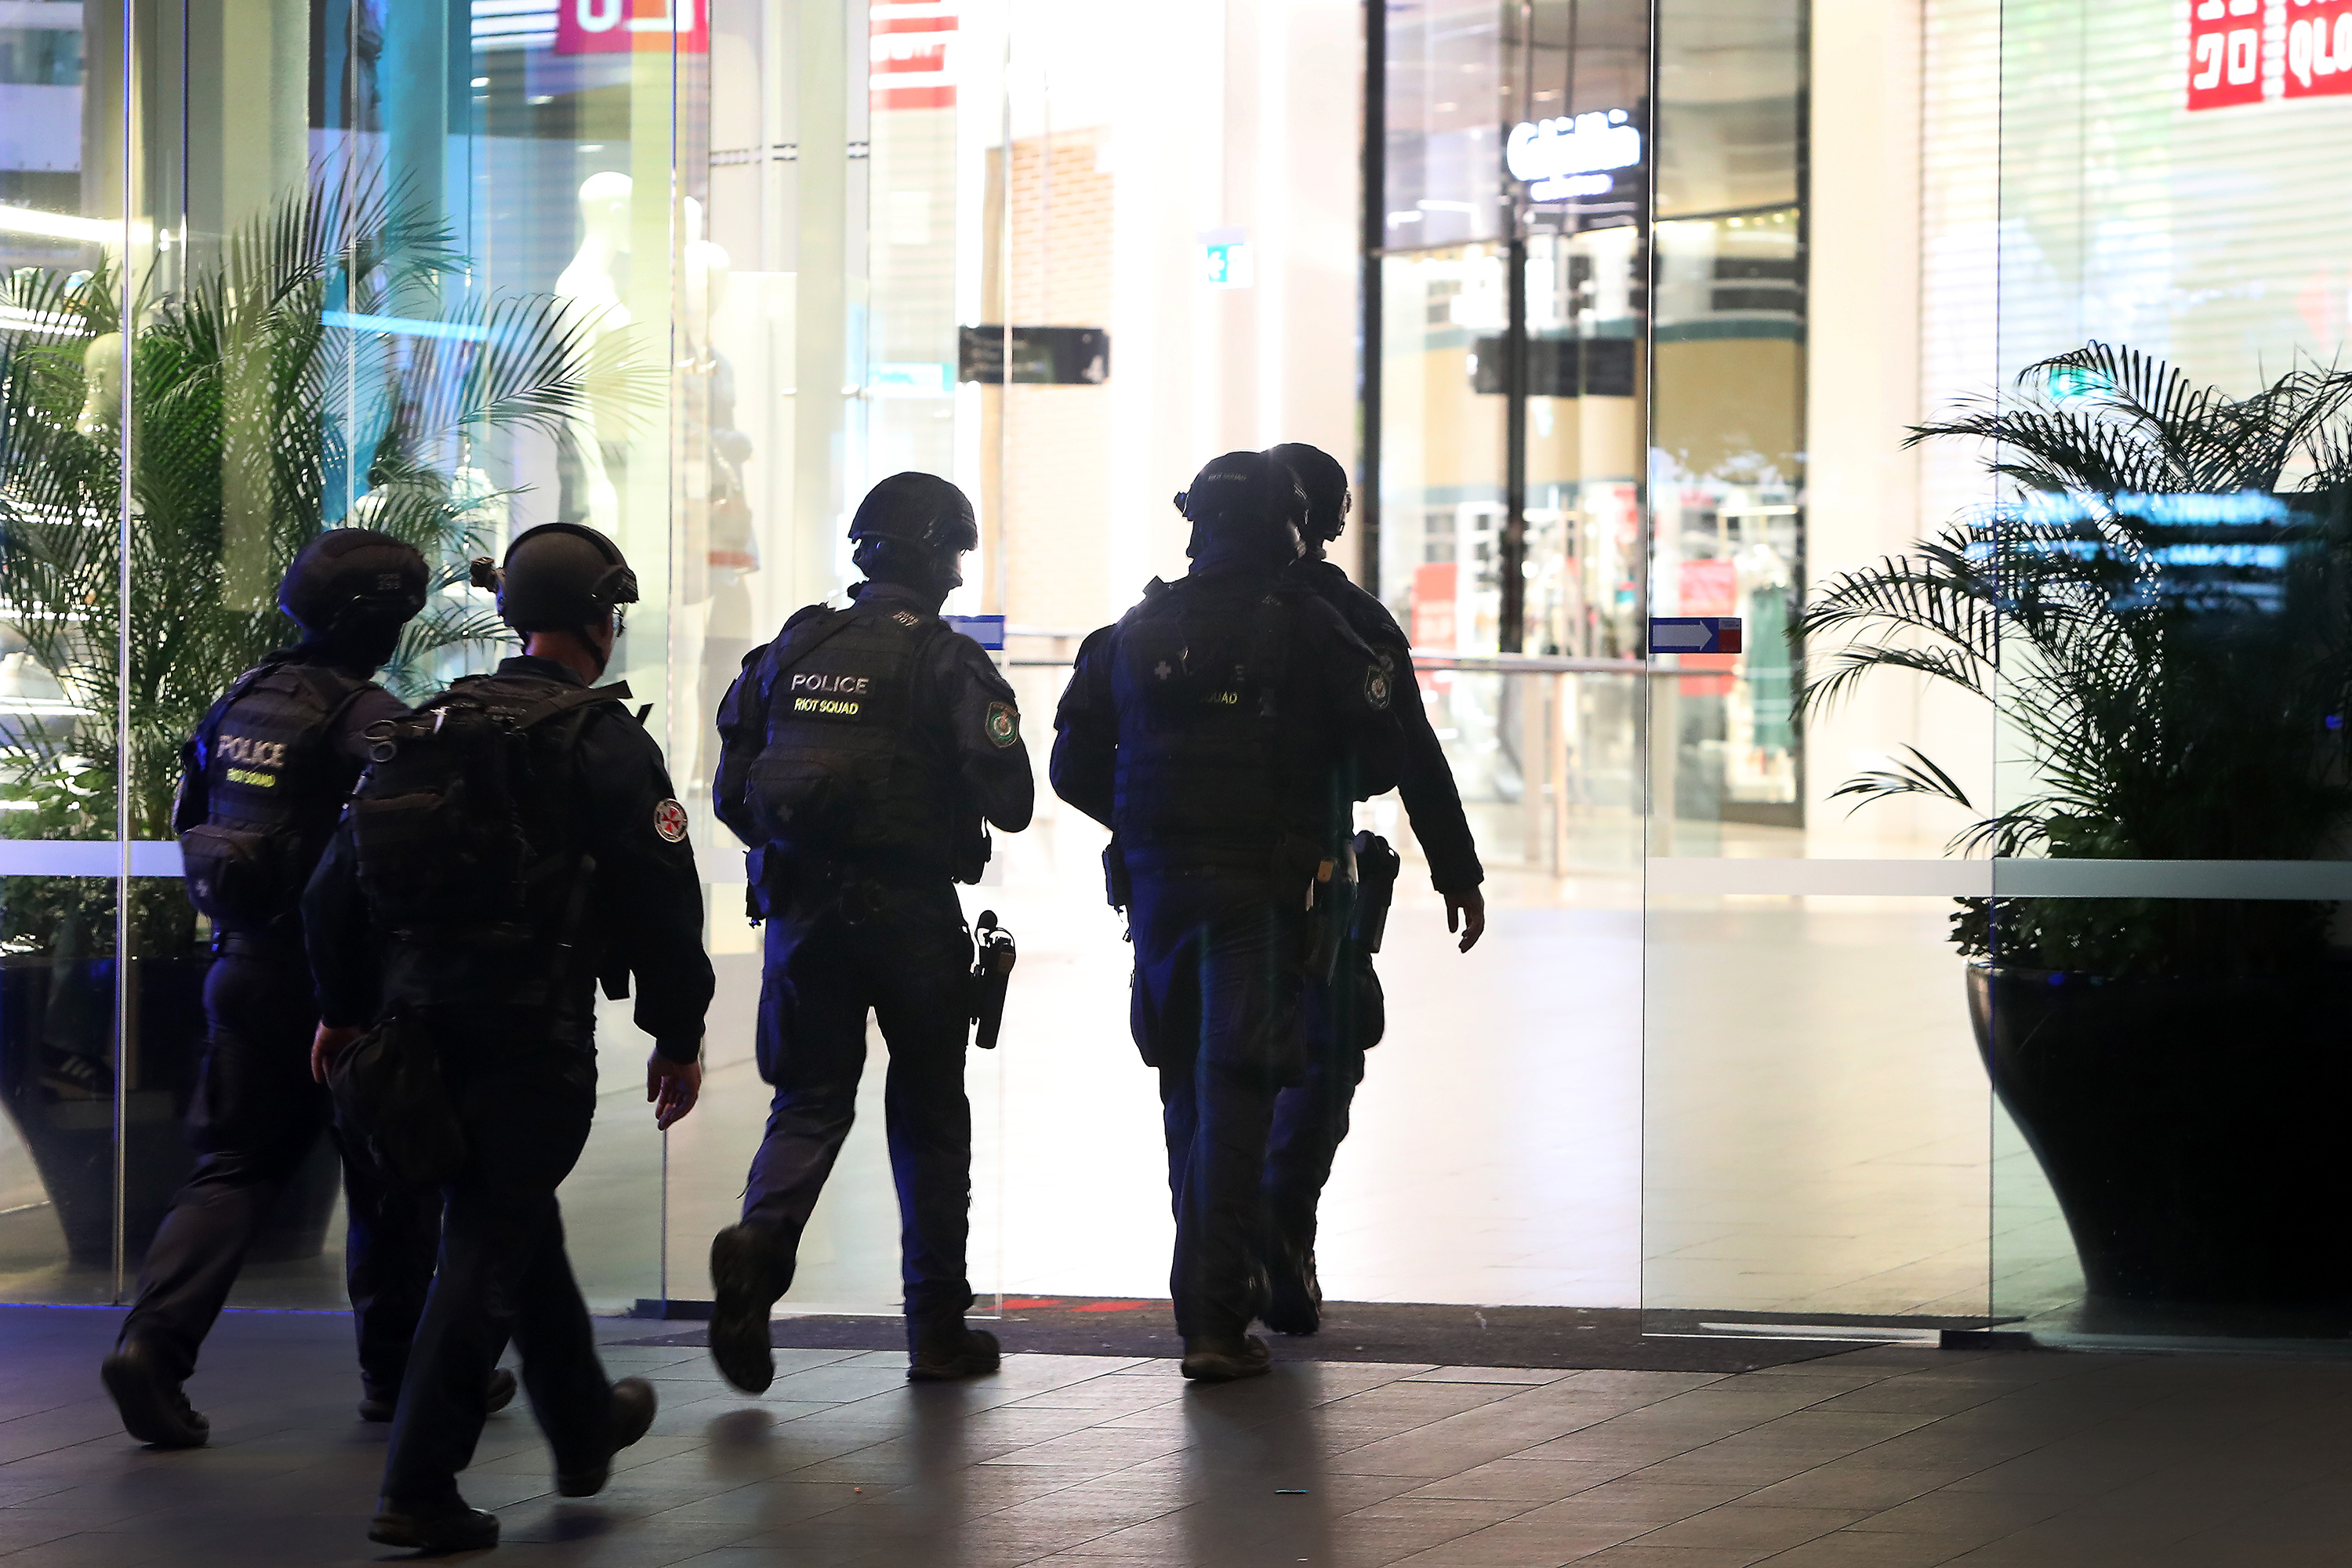 Police enter the shopping mall. 